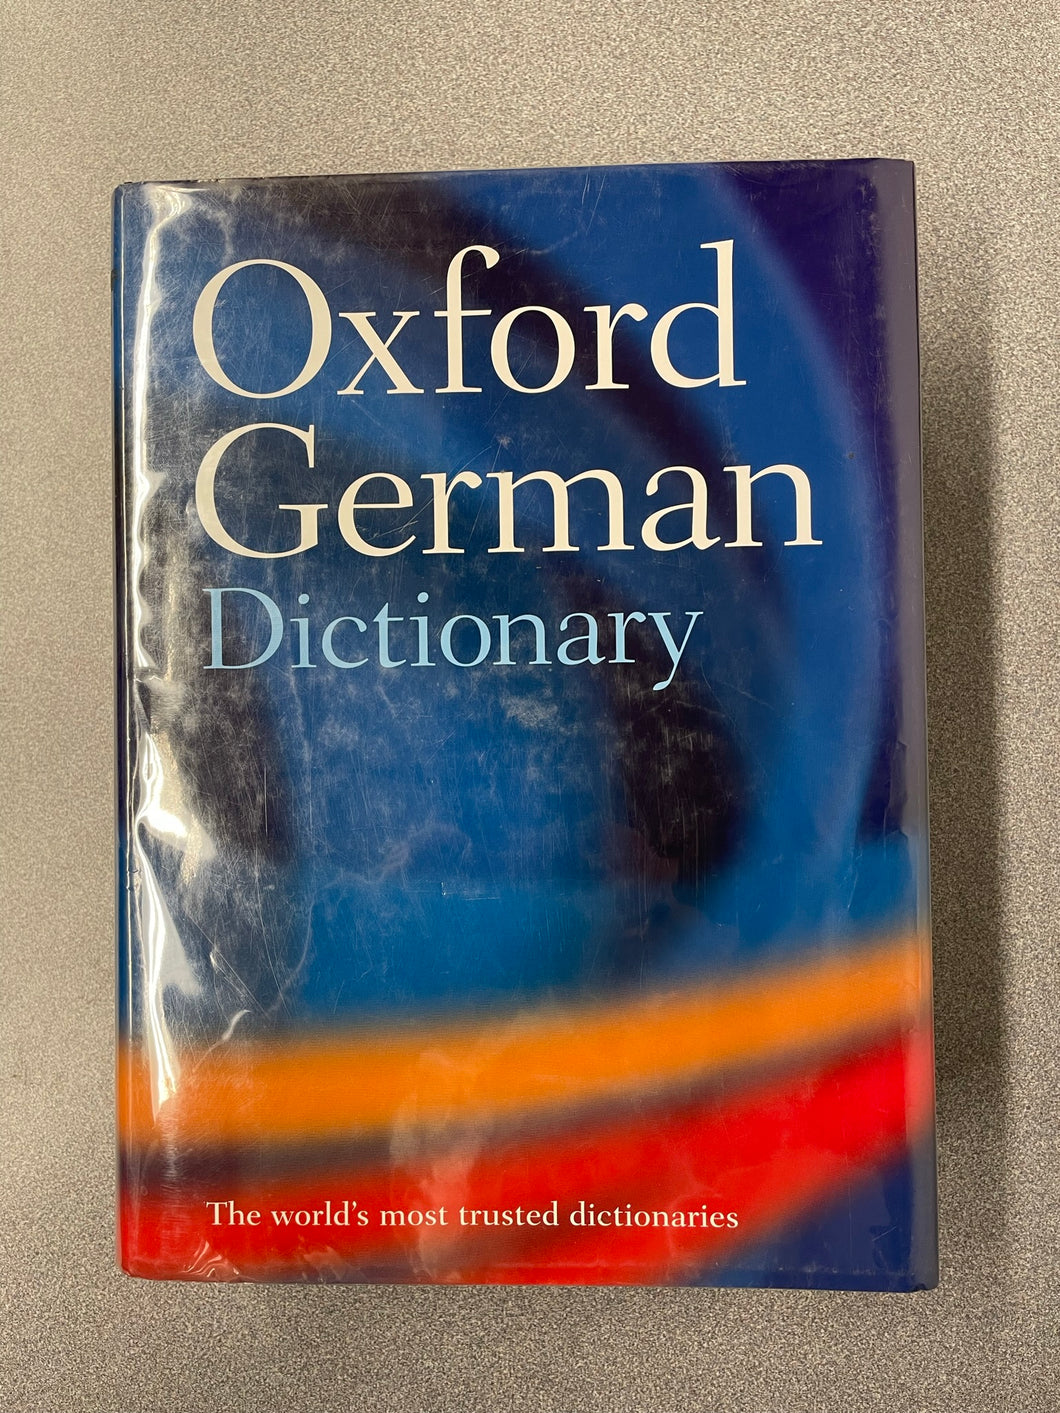 Oxford German Dictionary, German-English * English-German, Scholze-Stuberrecht, W, ed. [2008] REF 6/23